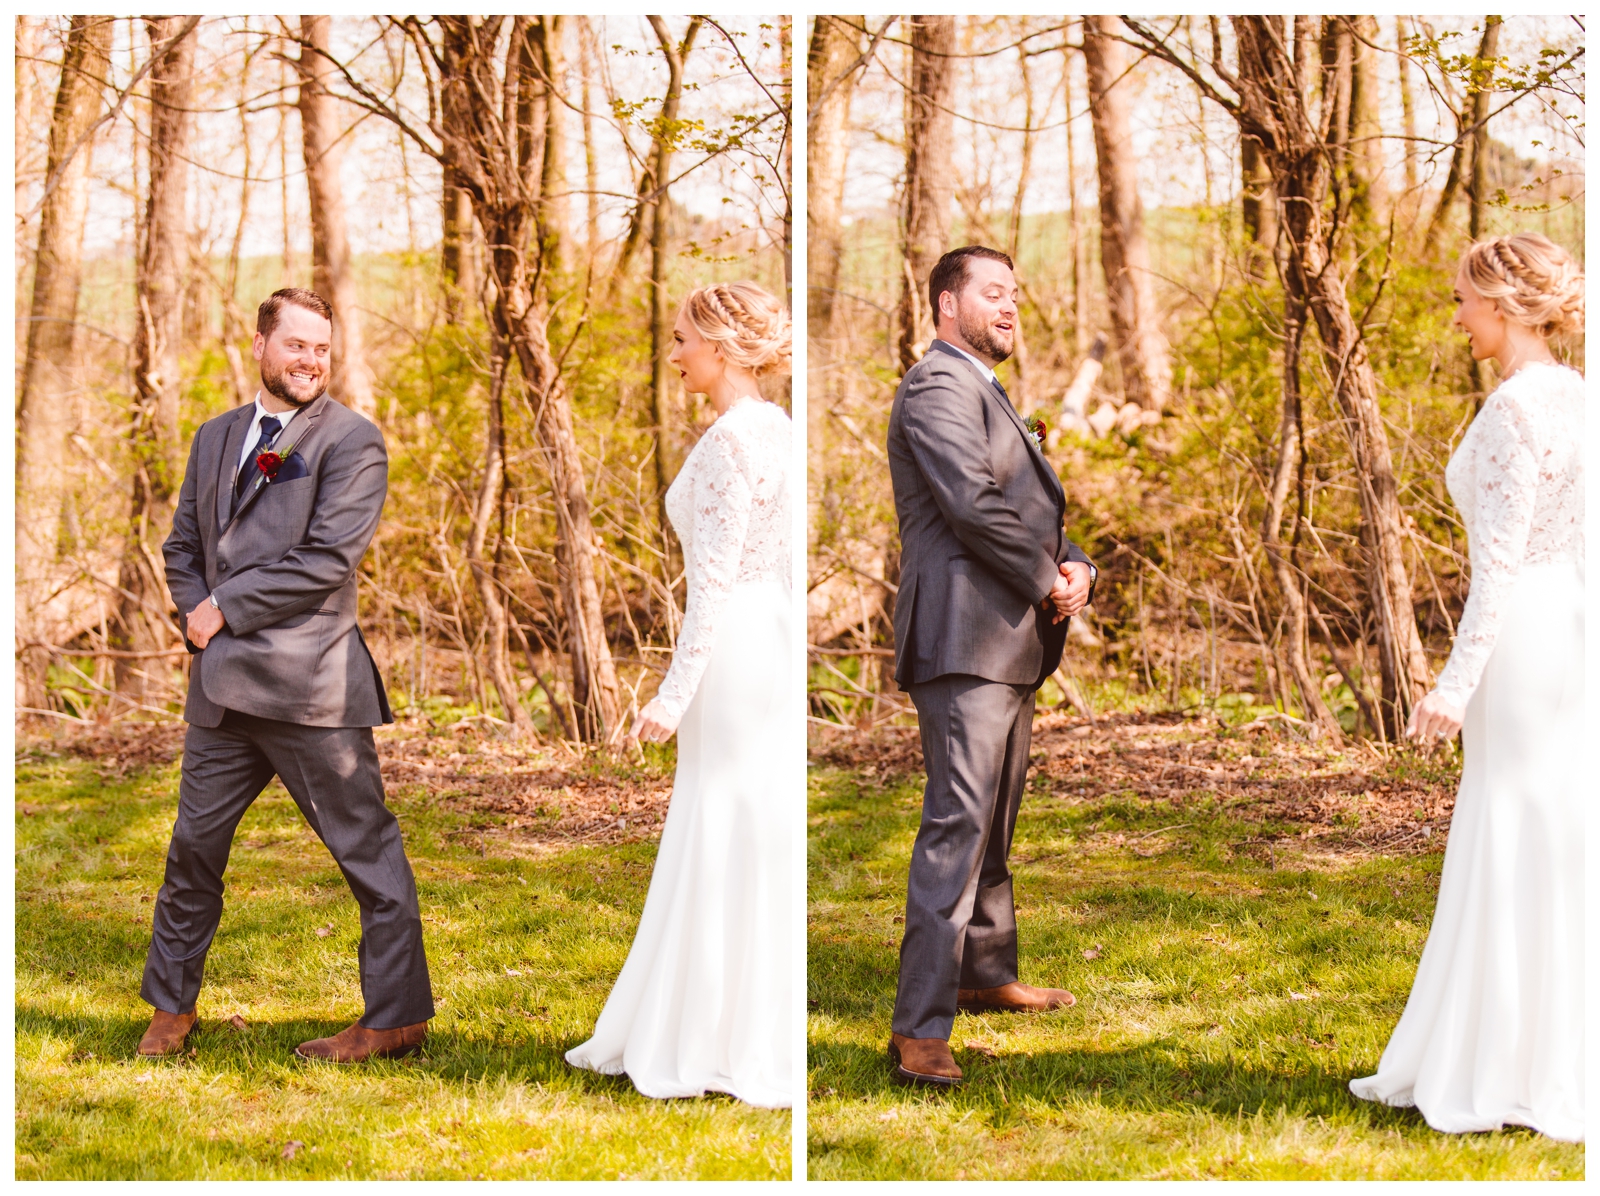 Bohemian Spring Backyard Wedding Inspiration - Blue Wedding - Brooke Michelle Photography